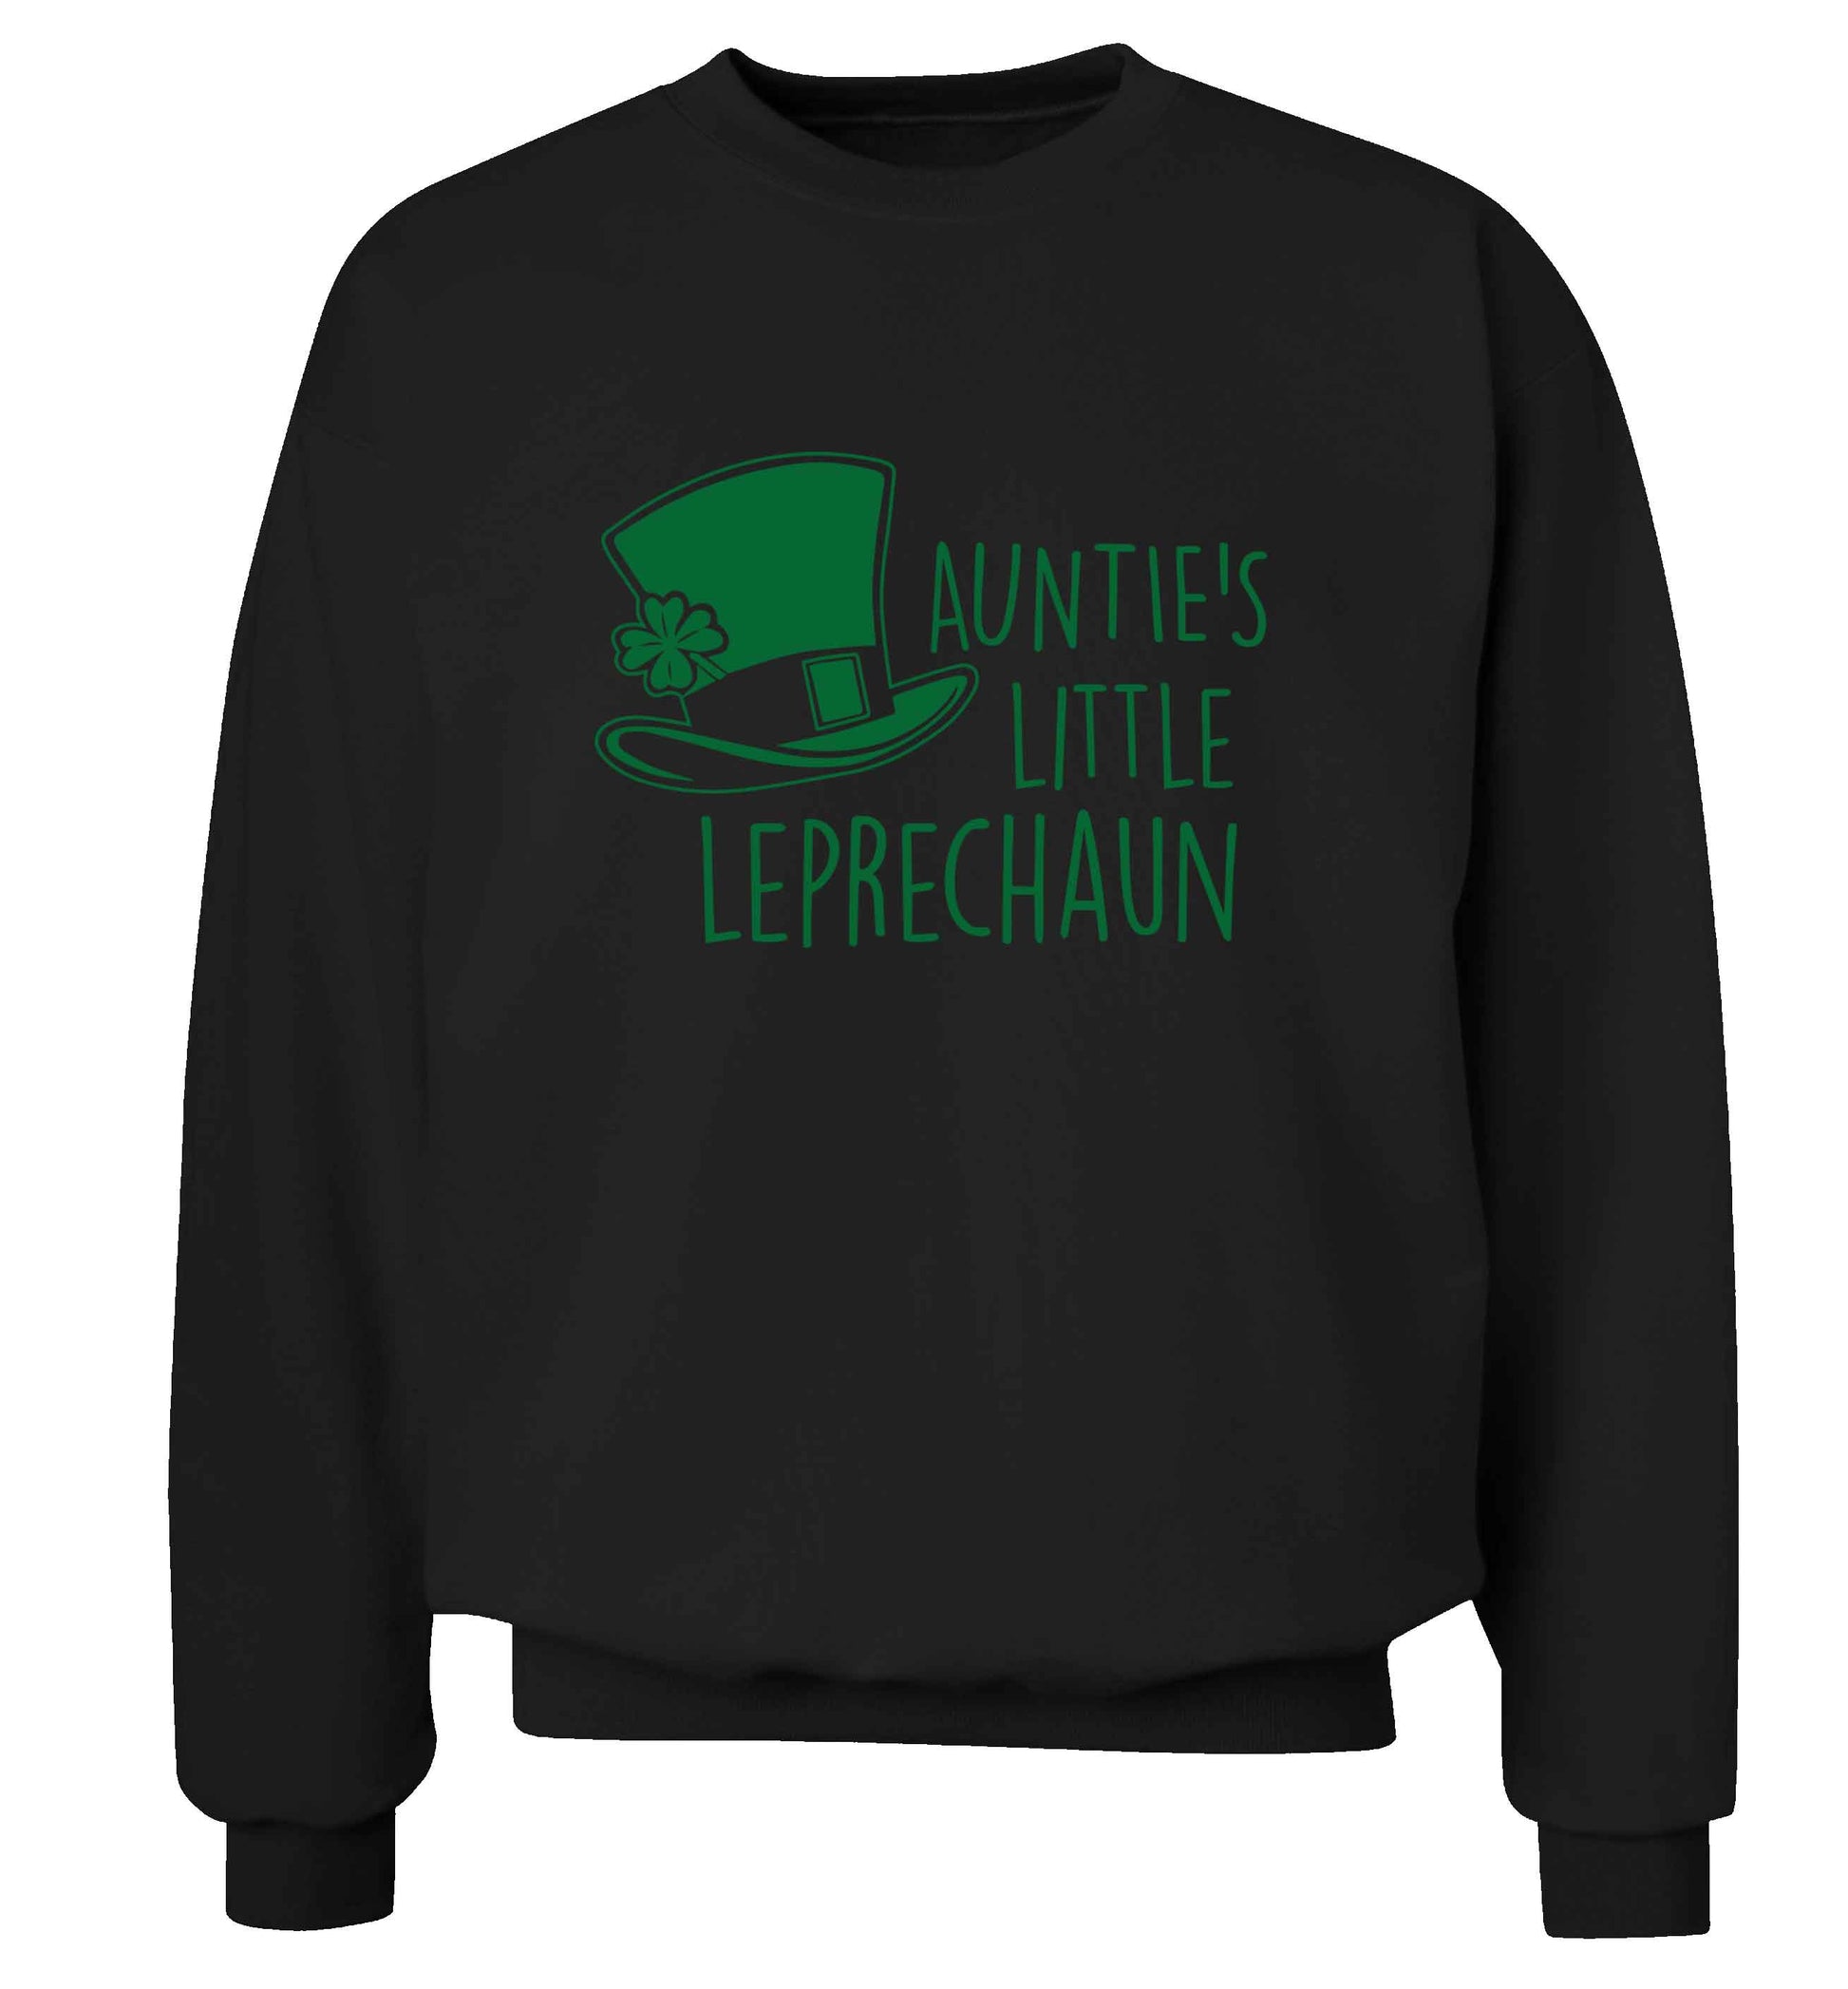 Auntie's little leprechaun adult's unisex black sweater 2XL